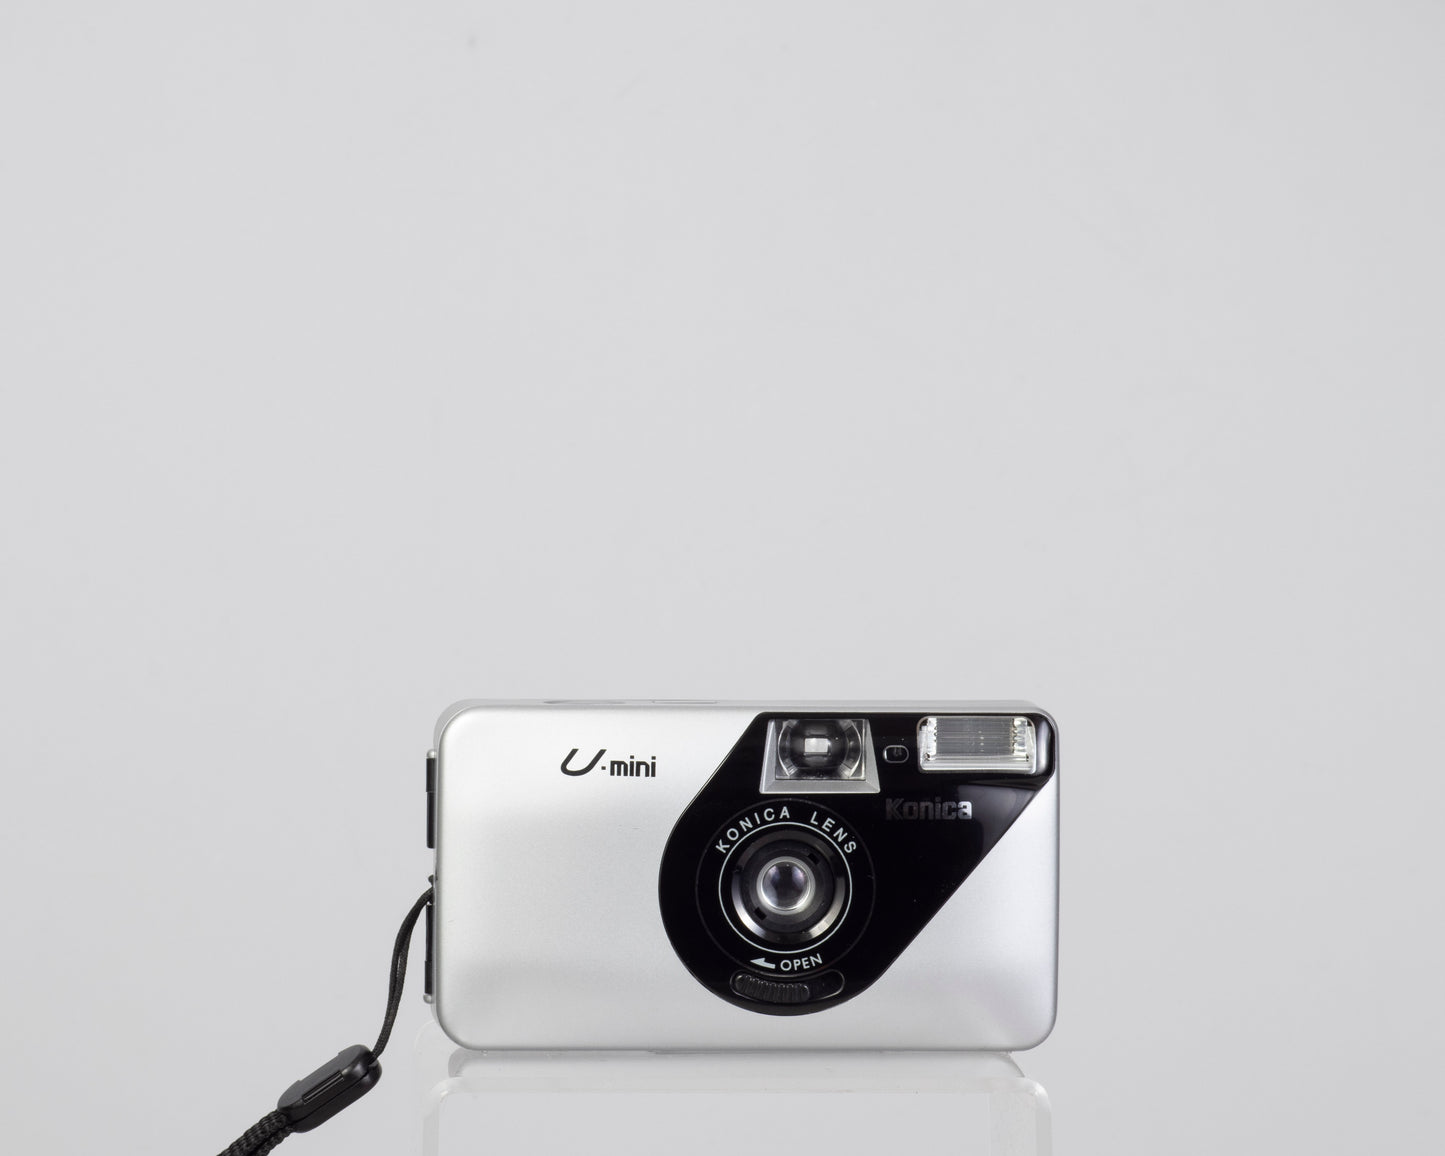 The Konica U-mini ultra compact 35mm film camera